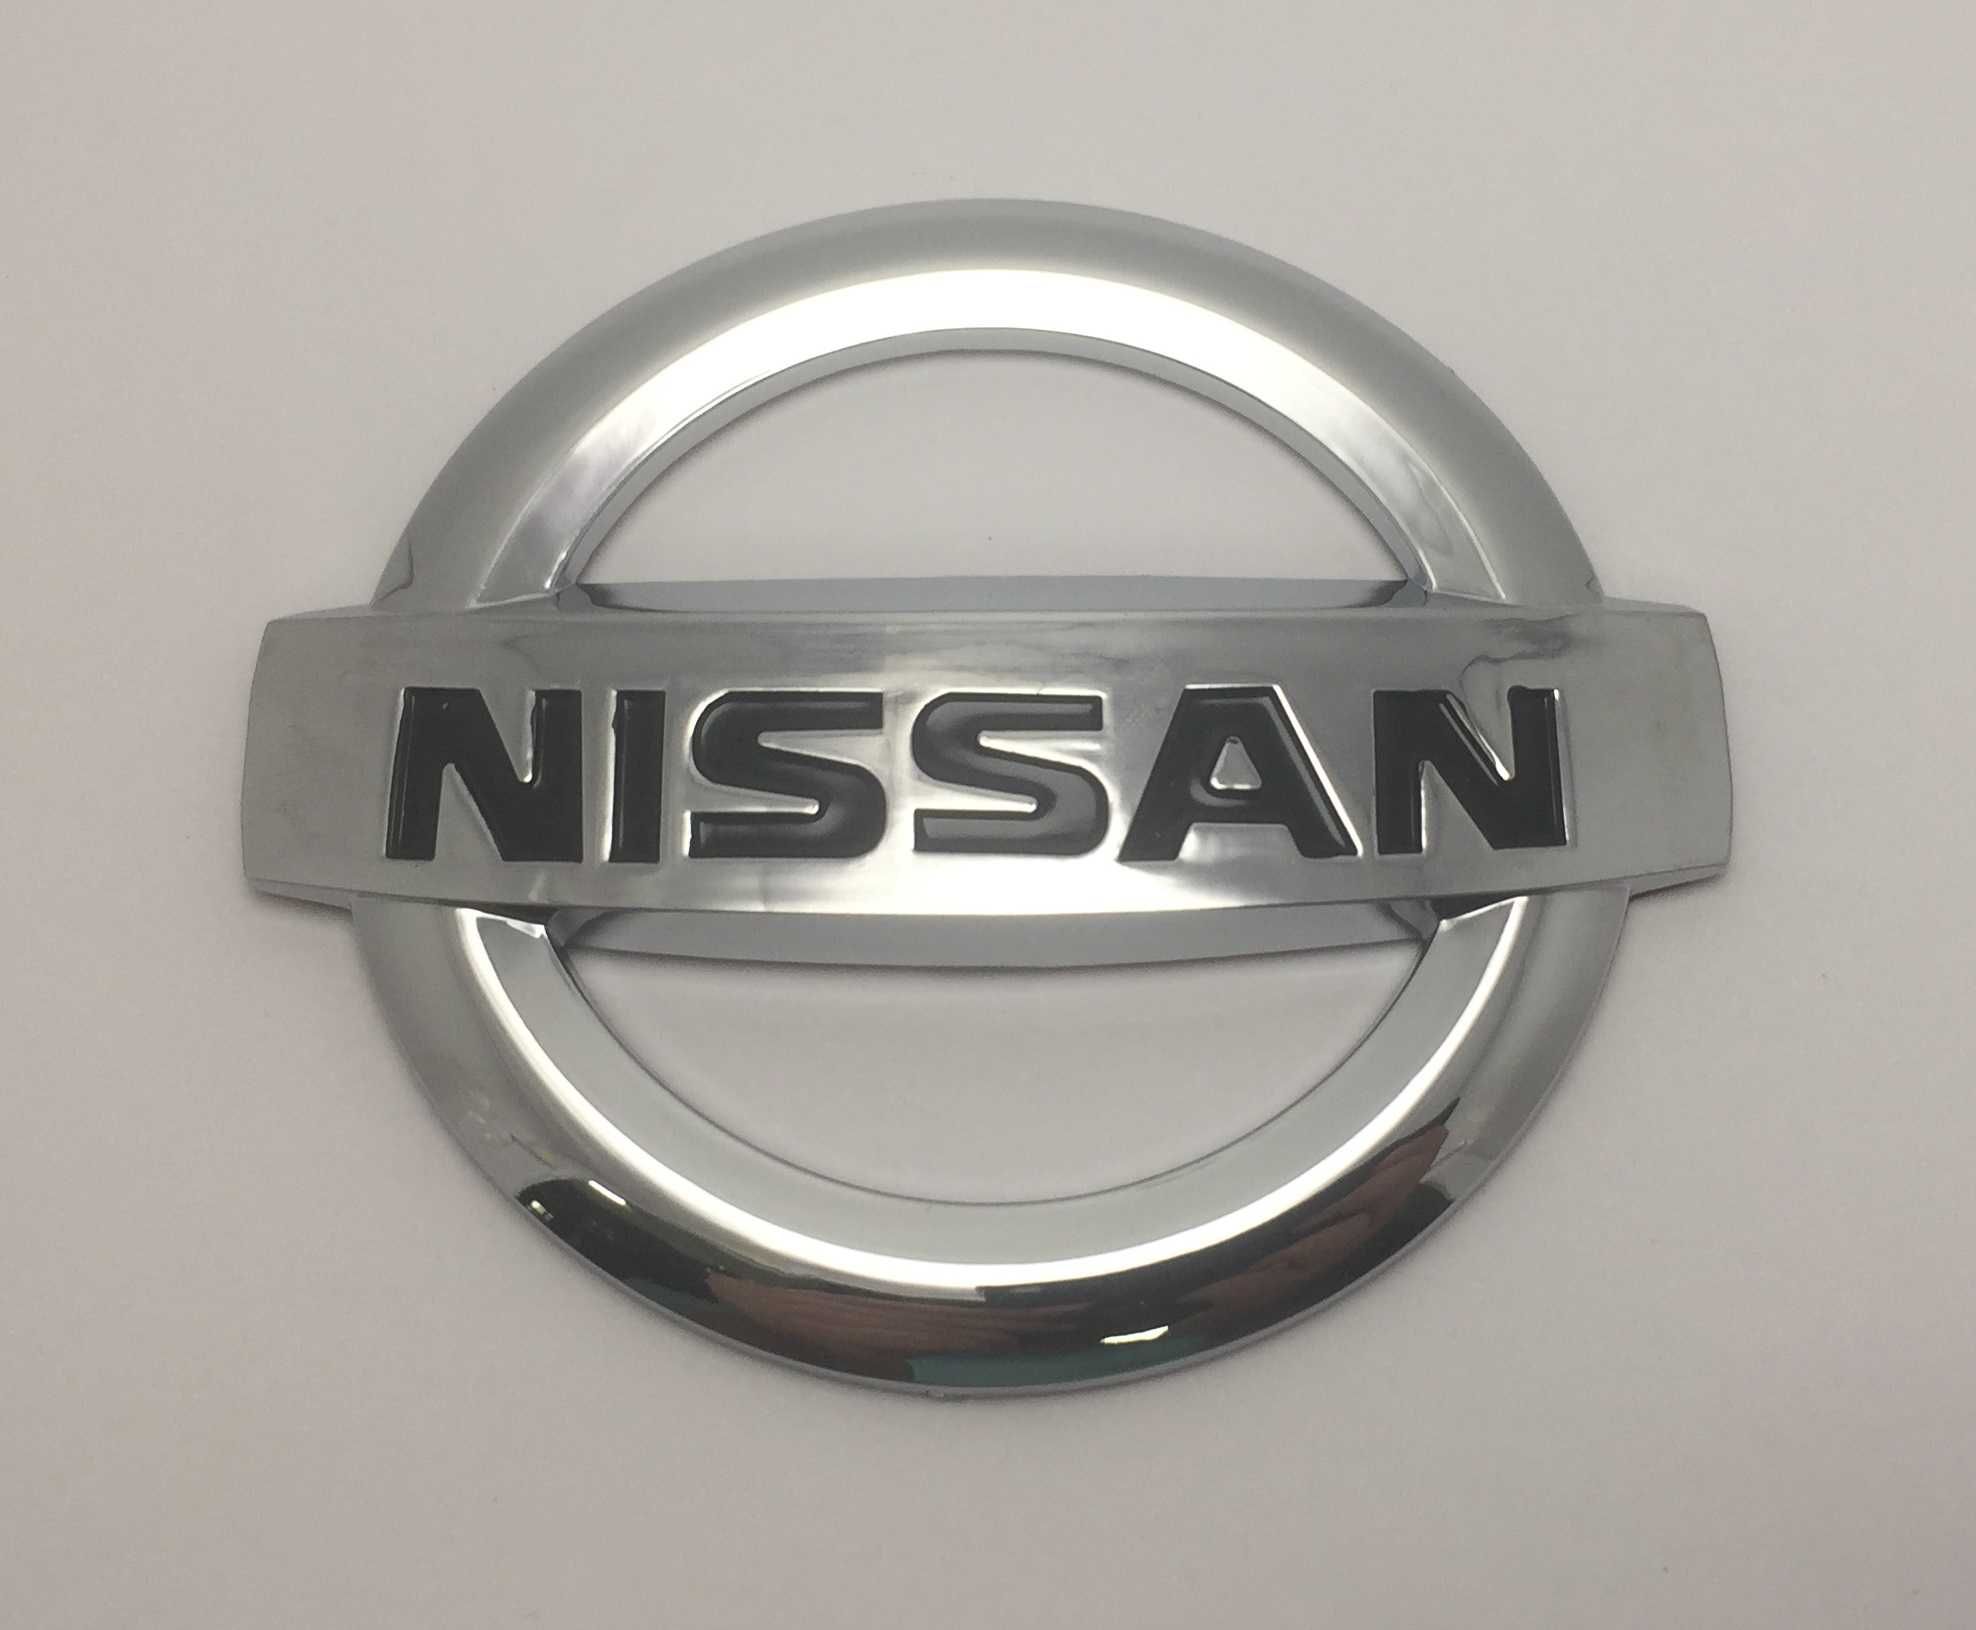 Емблеми написи ковпачки дисків Nissan Xtrail Qashqai Tiida Teana